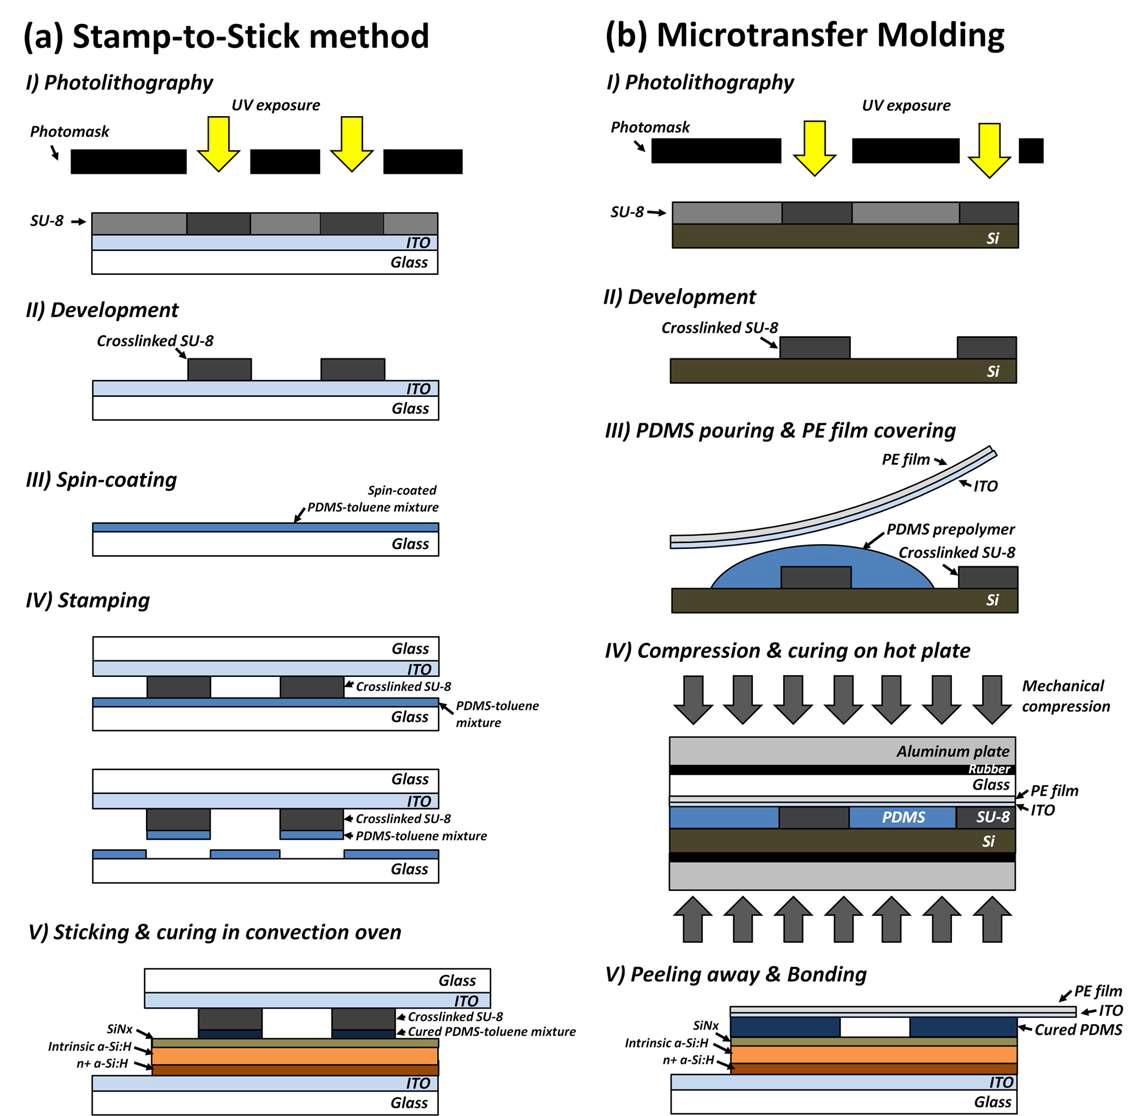 (a) Stamp-to-Stick Method 및 (b) Microtransfer Molding을 이용한 미세유체 채널이 집적된 나노바이오 LOD 제작방법